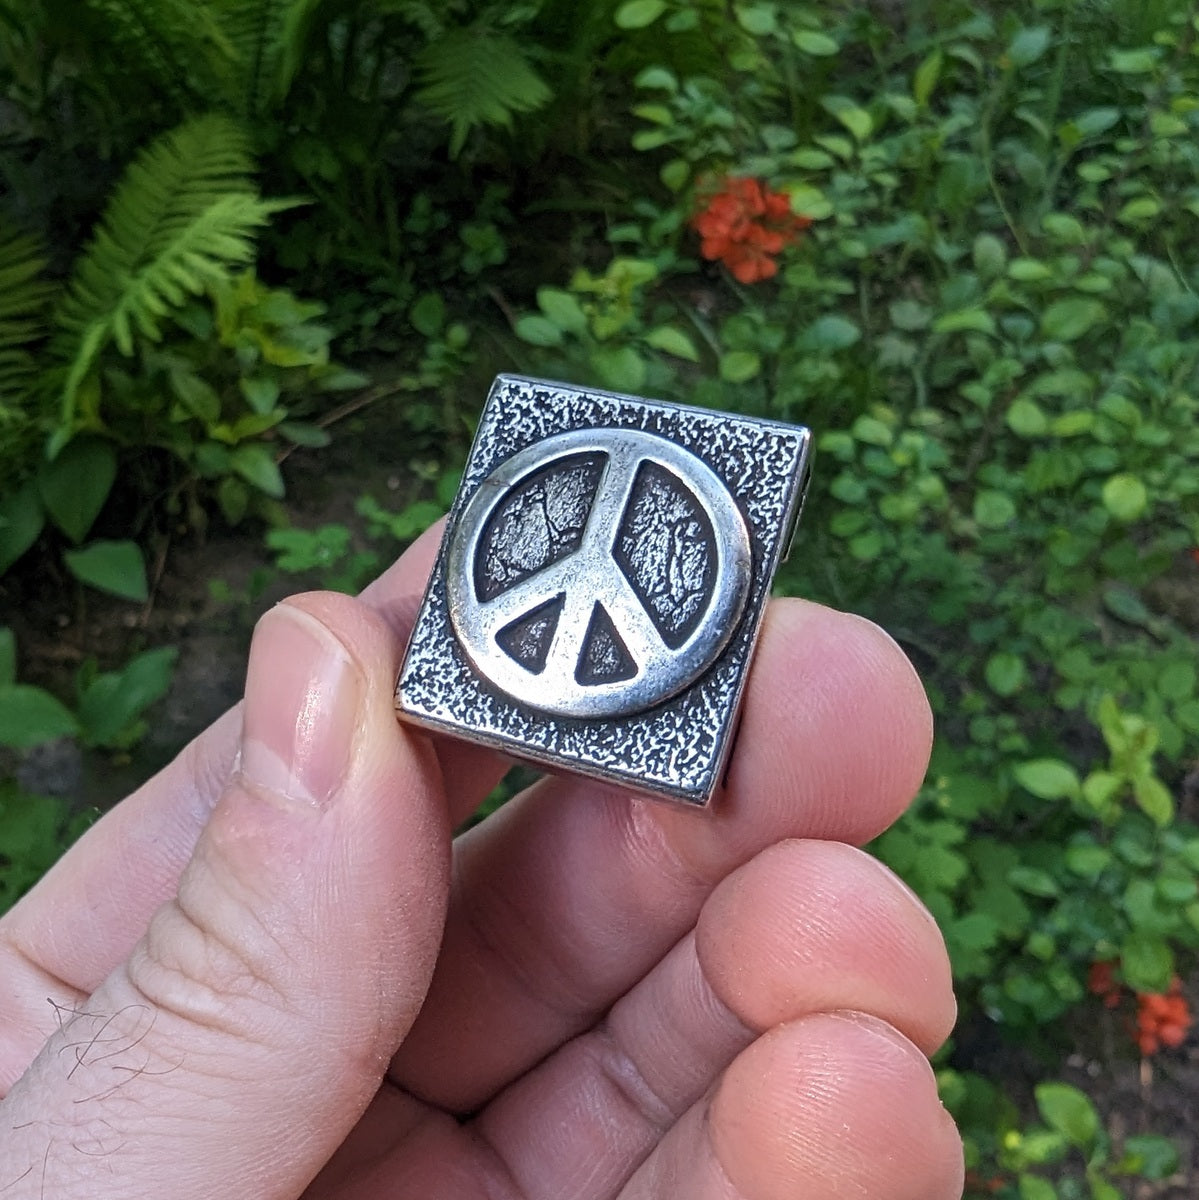 Clip molle symbole de paix en bronze 